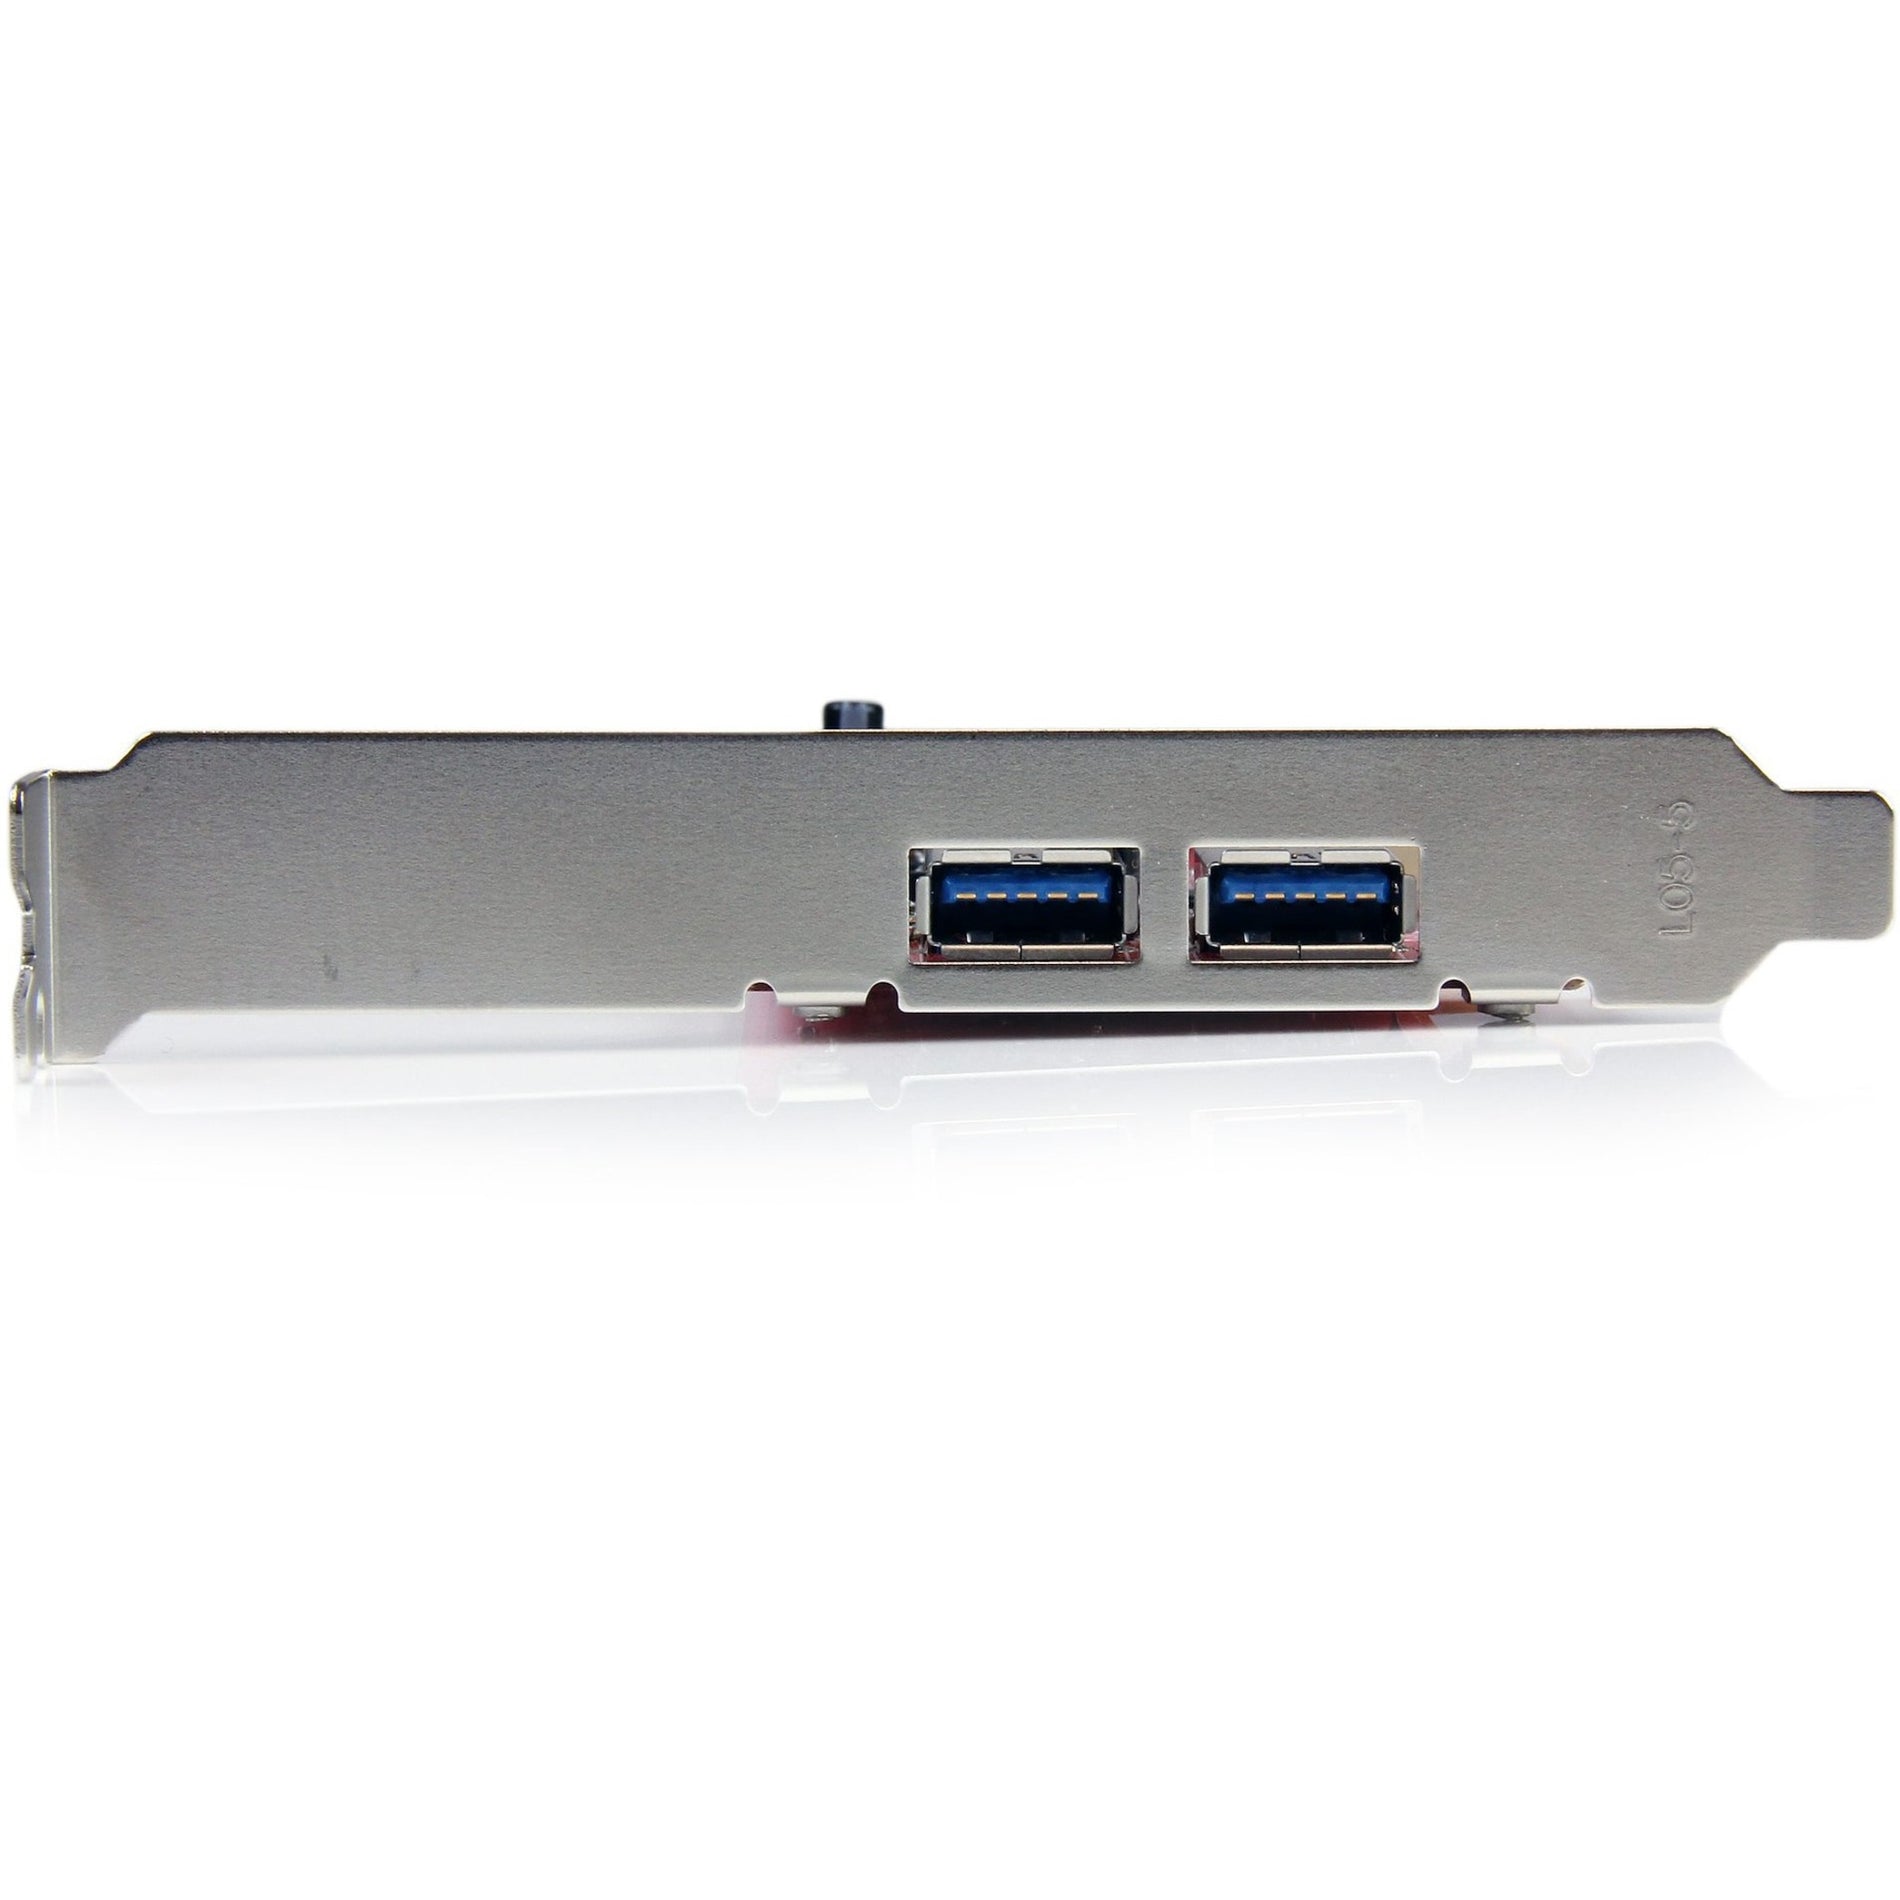 StarTech.com PCIUSB3S22 Tarjeta adaptadora PCI SuperSpeed USB 3.0 de 2 puertos con alimentación SATA transferencia de datos de alta velocidad e instalación fácil